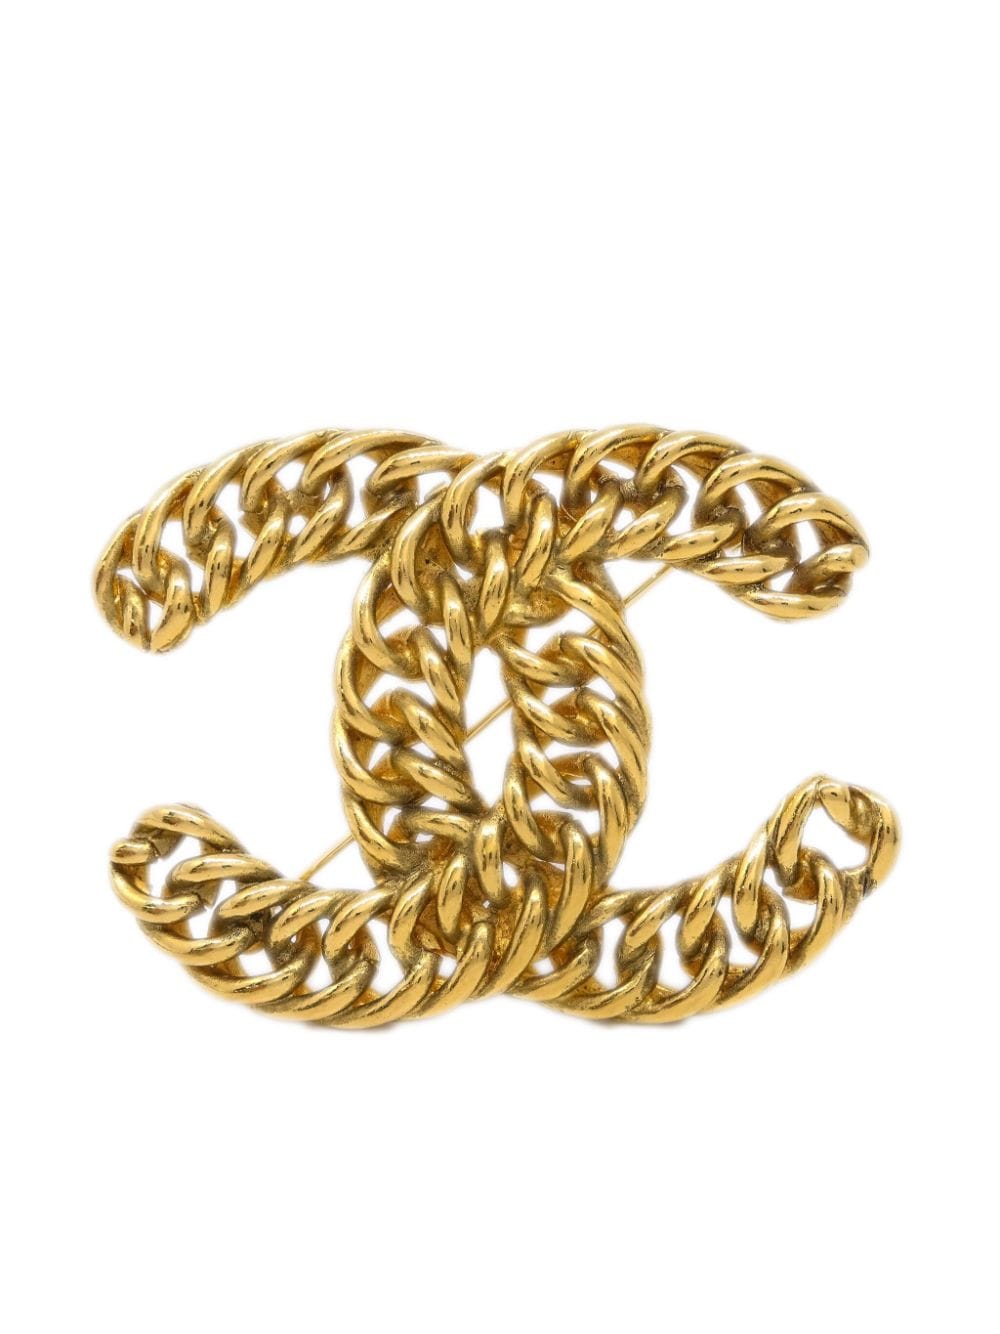 1980-1990 curb chain CC-logo brooch